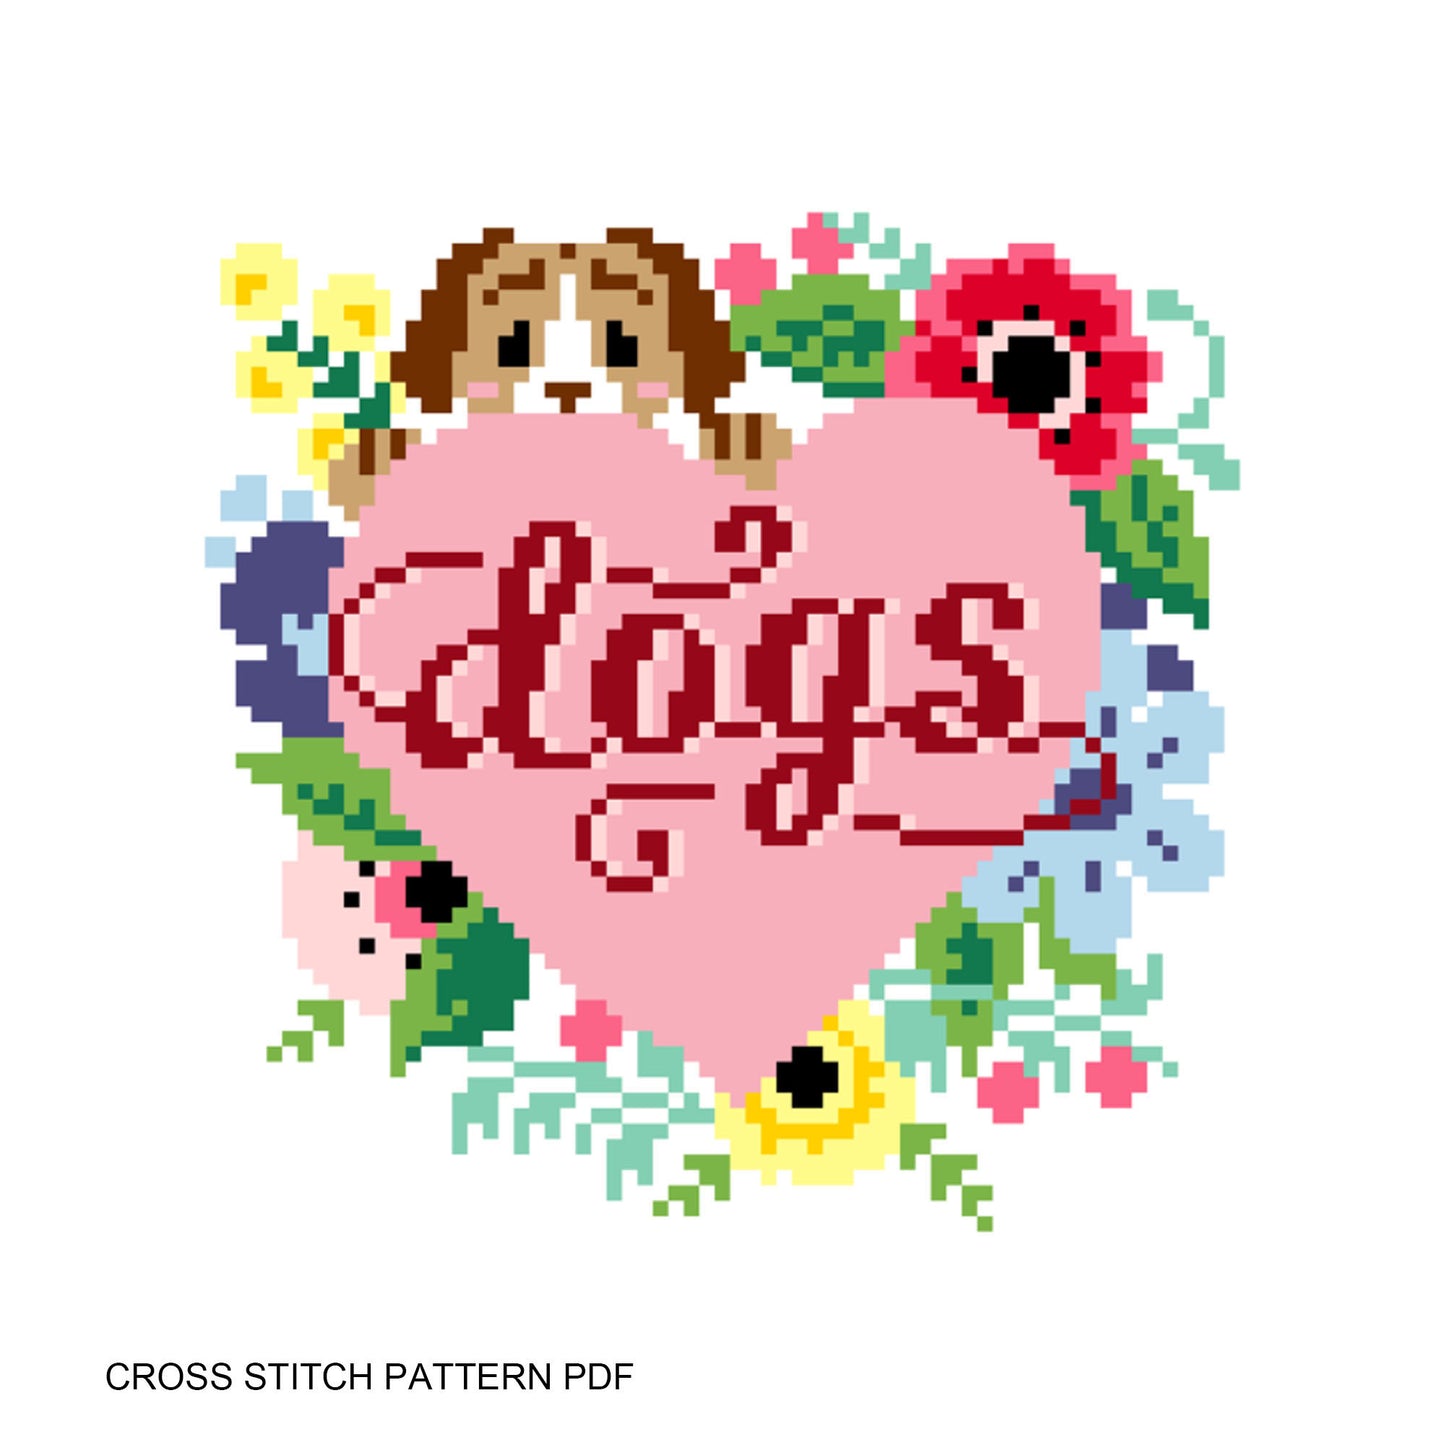 Dogs - Cross Stitch Pattern PDF.